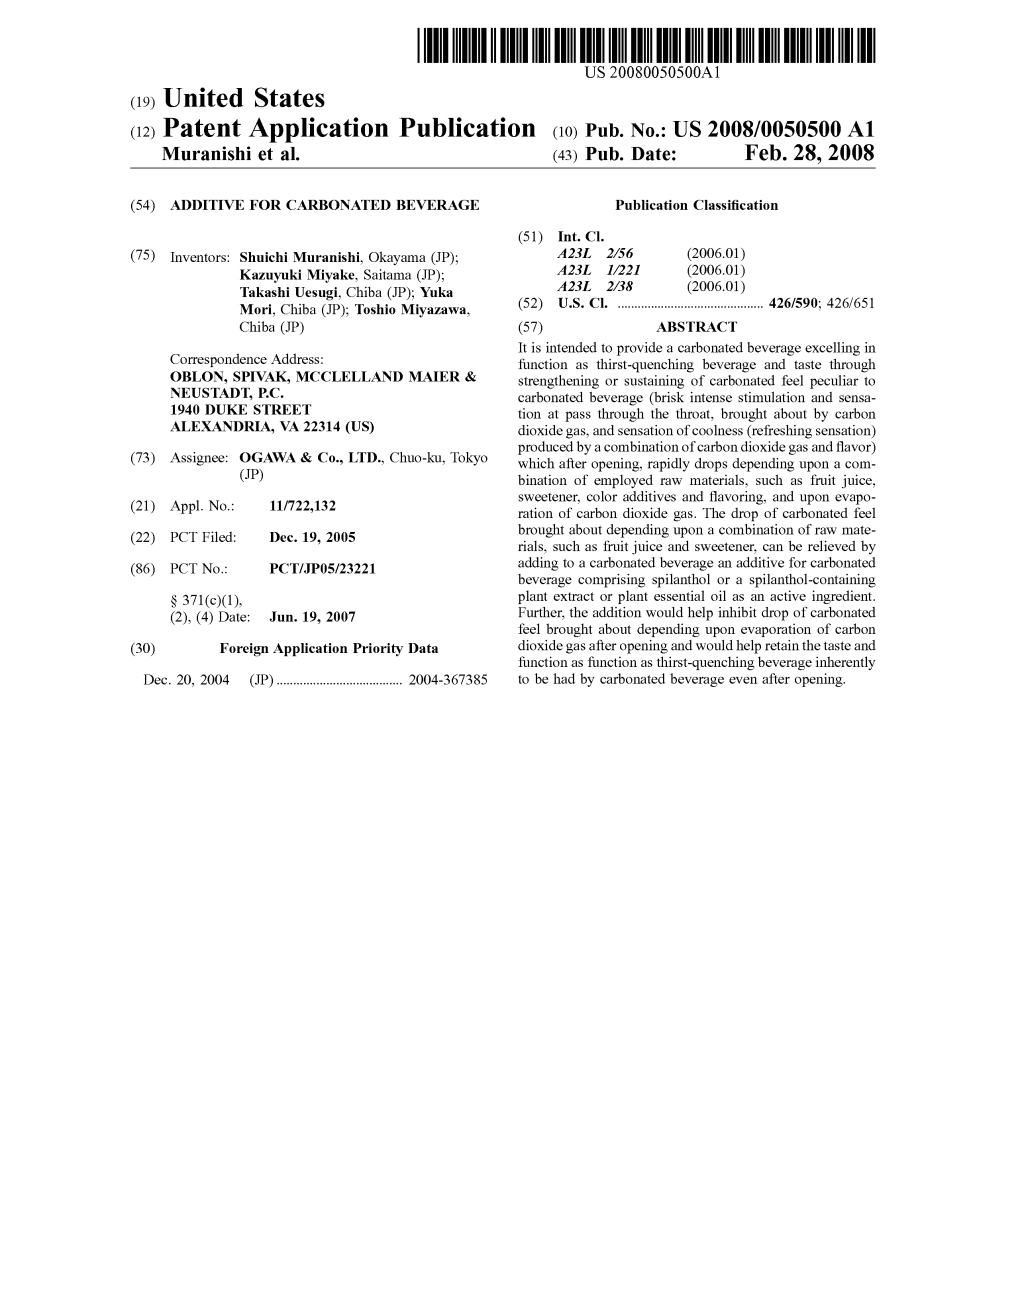 (12) Patent Application Publication (10) Pub. No.: US 2008/0050500 A1 Muranishi Et Al